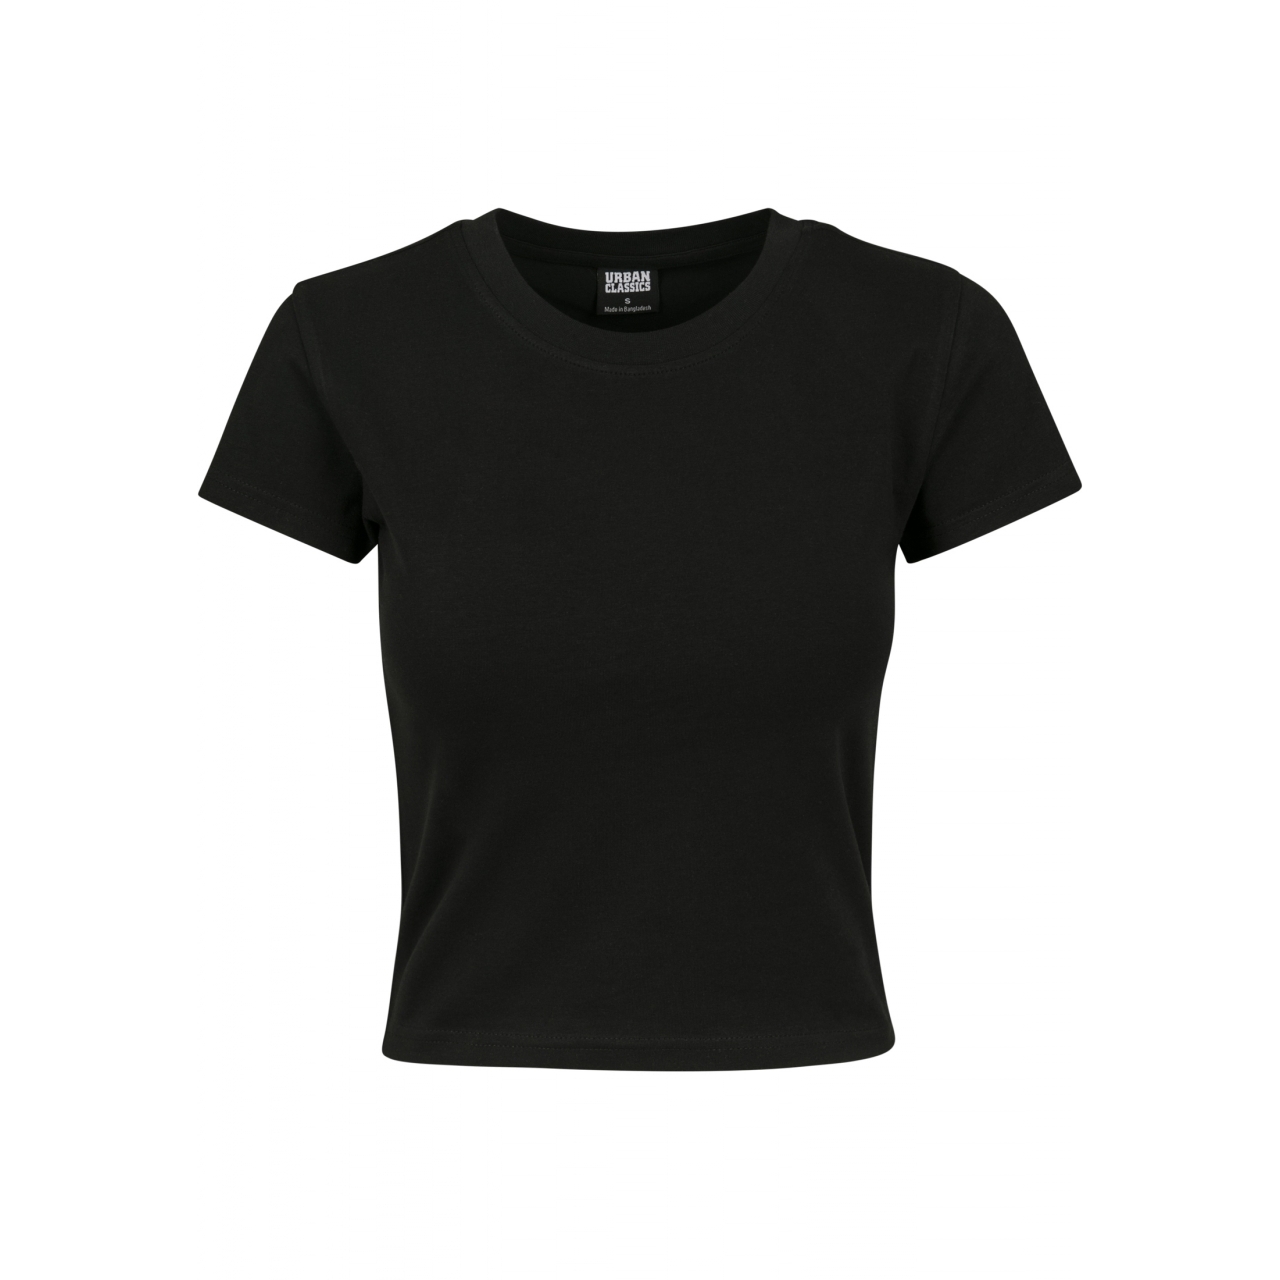 Triko dámské Urban Classics Ladies Stretch Jersey - černé, M